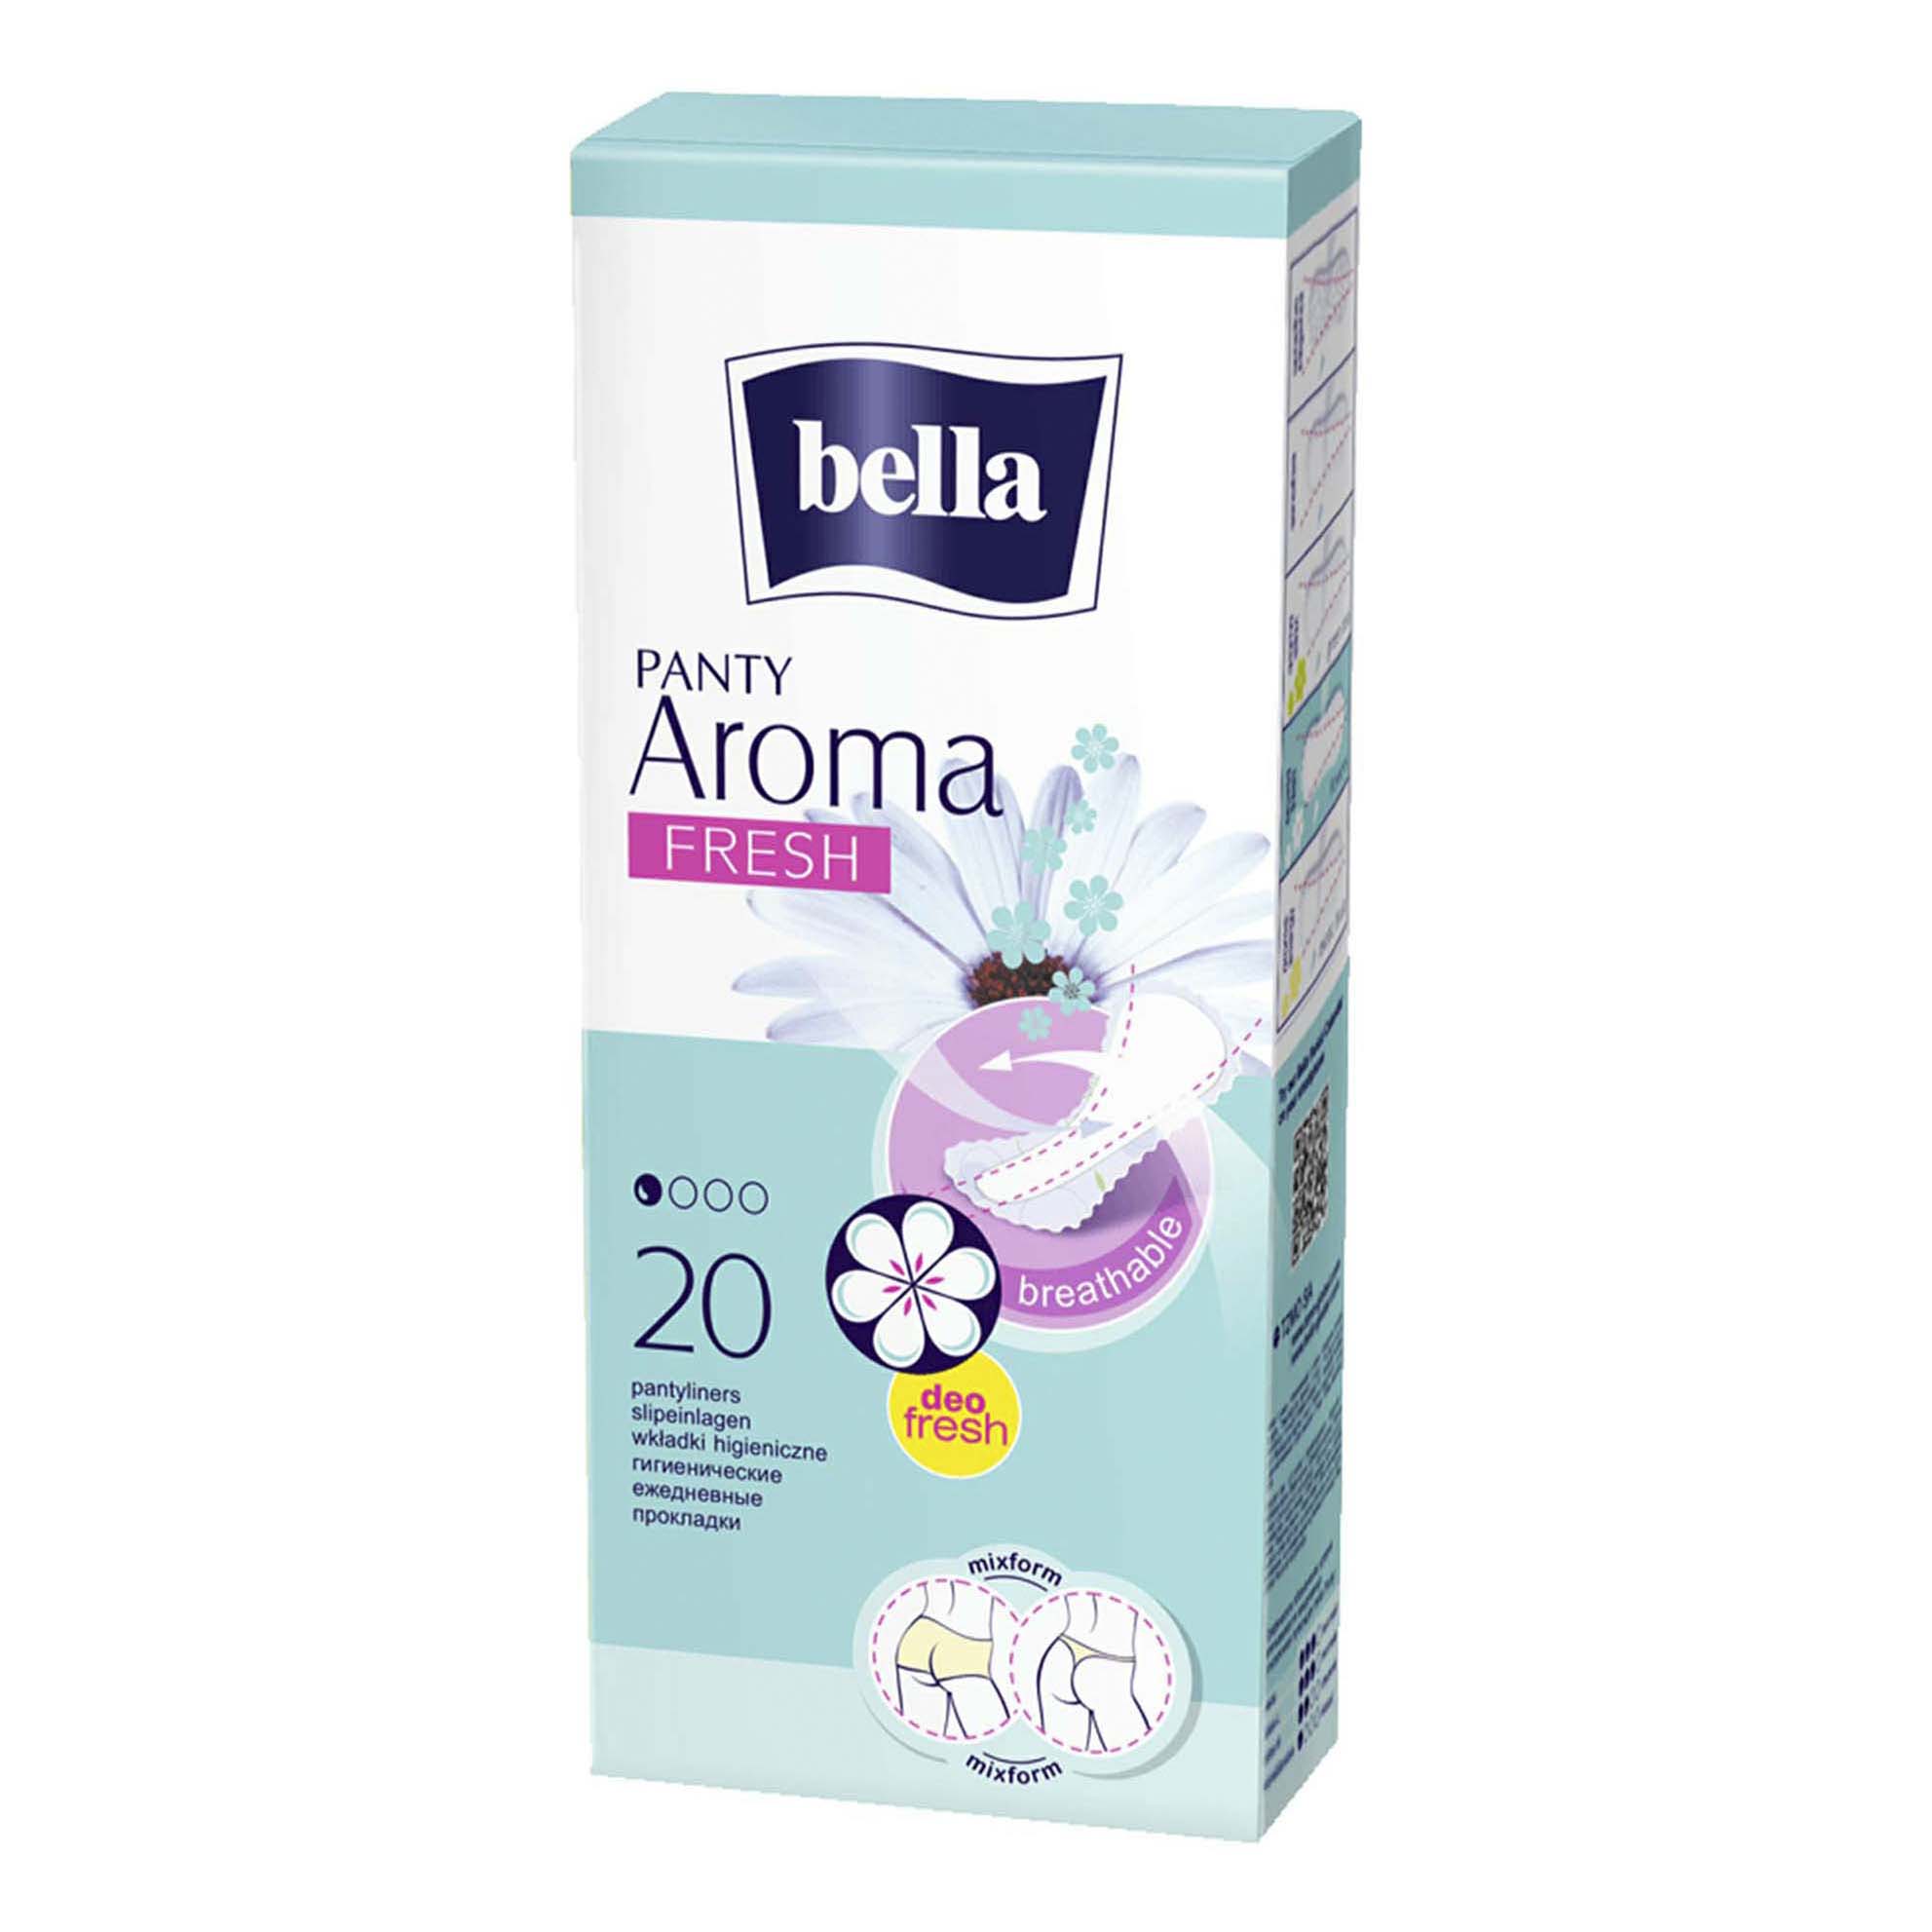 Прокладки Bella Panty aroma fresh ежедневные 20 шт прокладки ежедневные bella panty aroma fresh 60 шт